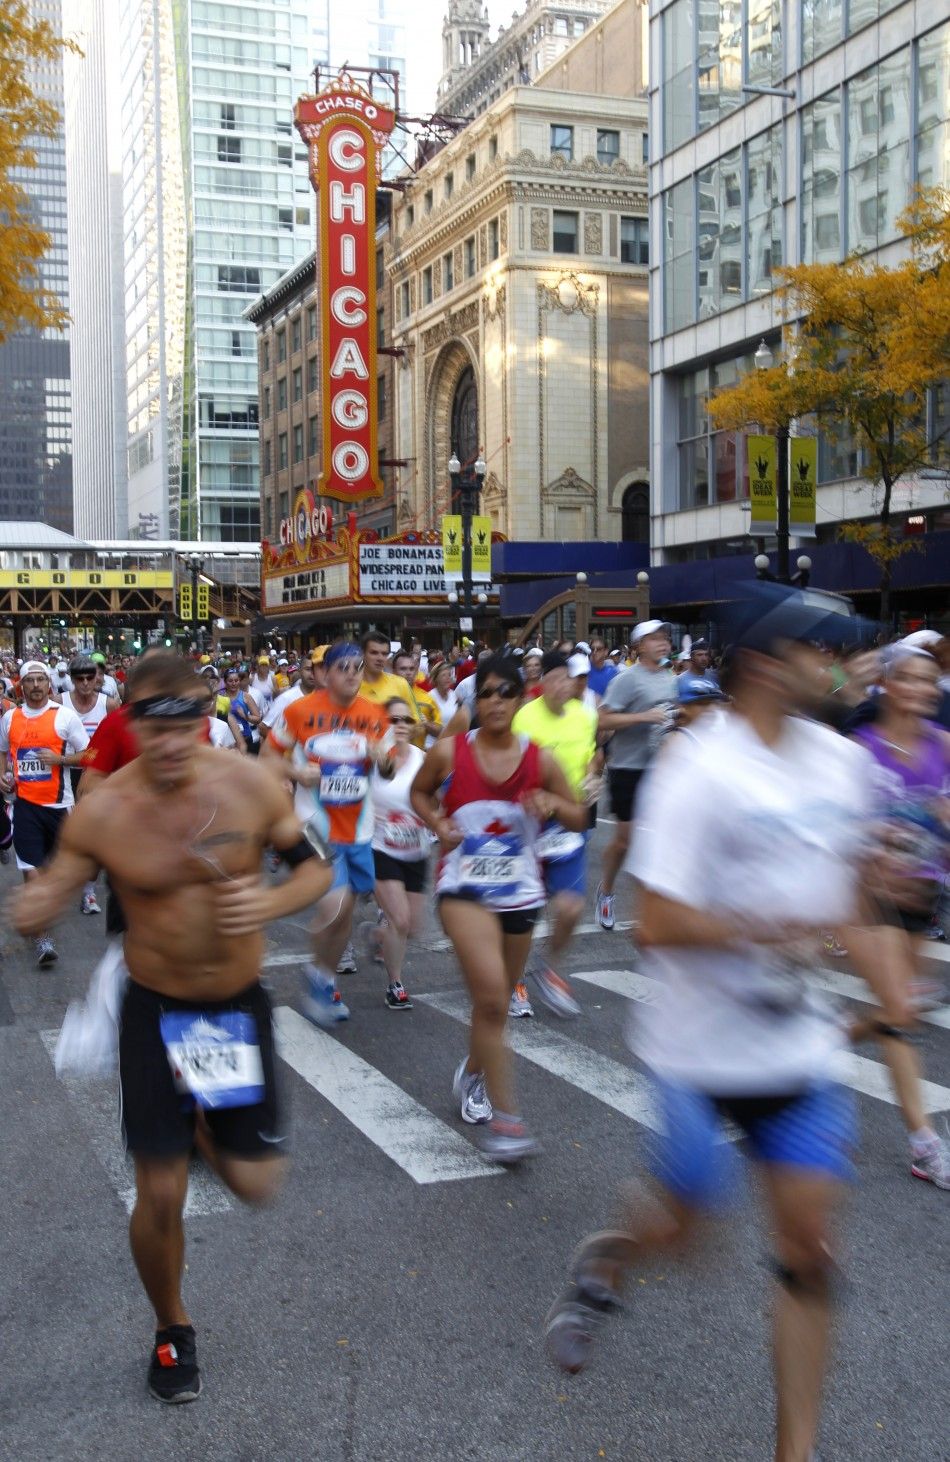 Runners participate in the Chicago Marathon